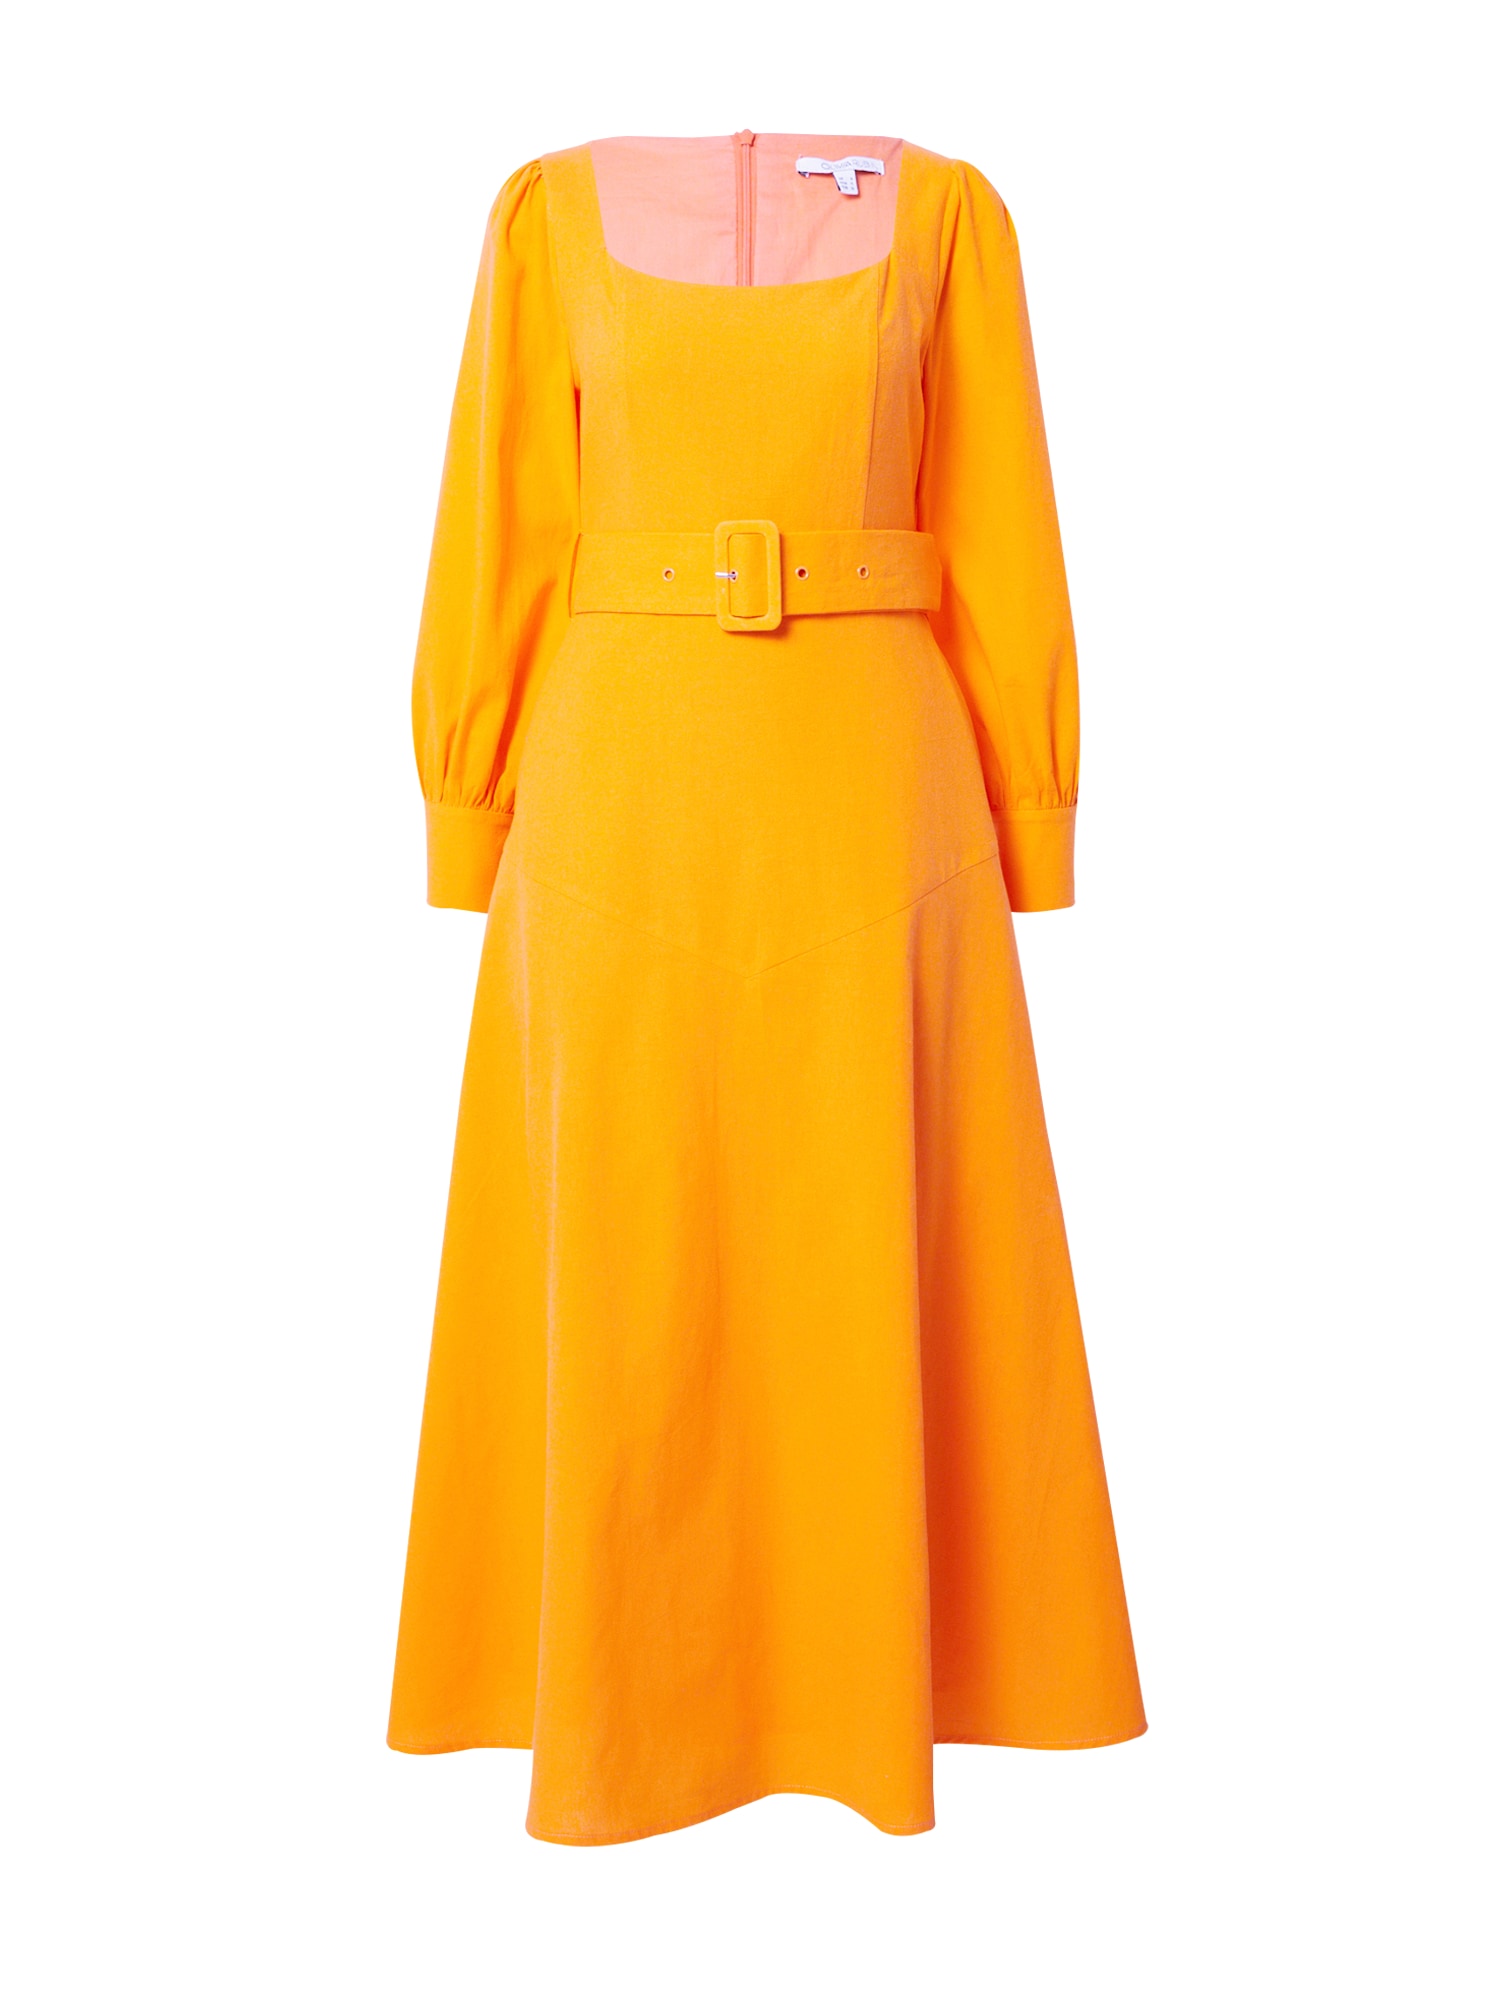 Šaty ALLEGRA oranžová Olivia Rubin